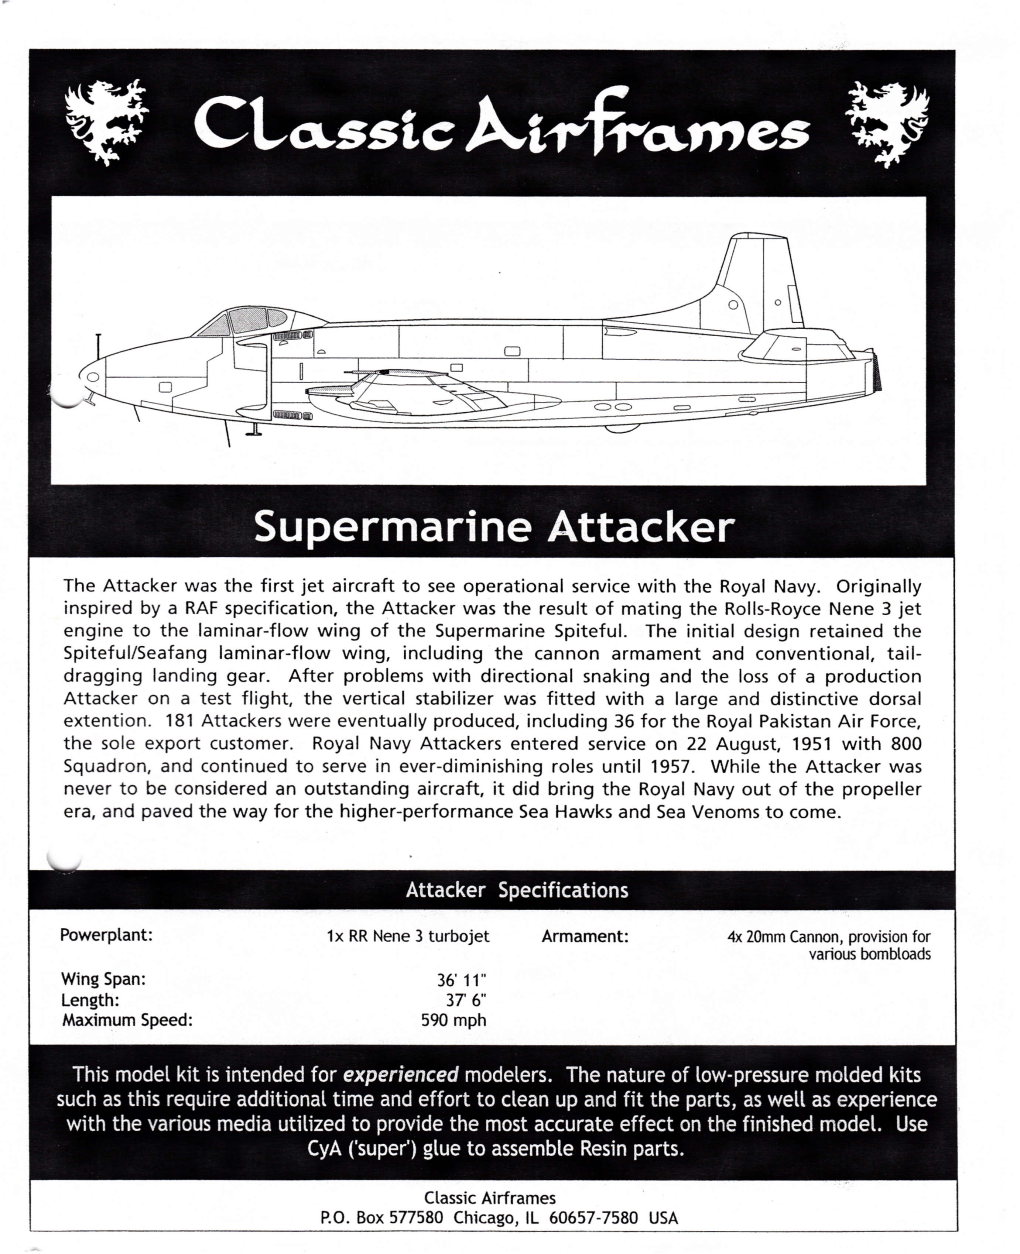 Supermarine Attacker